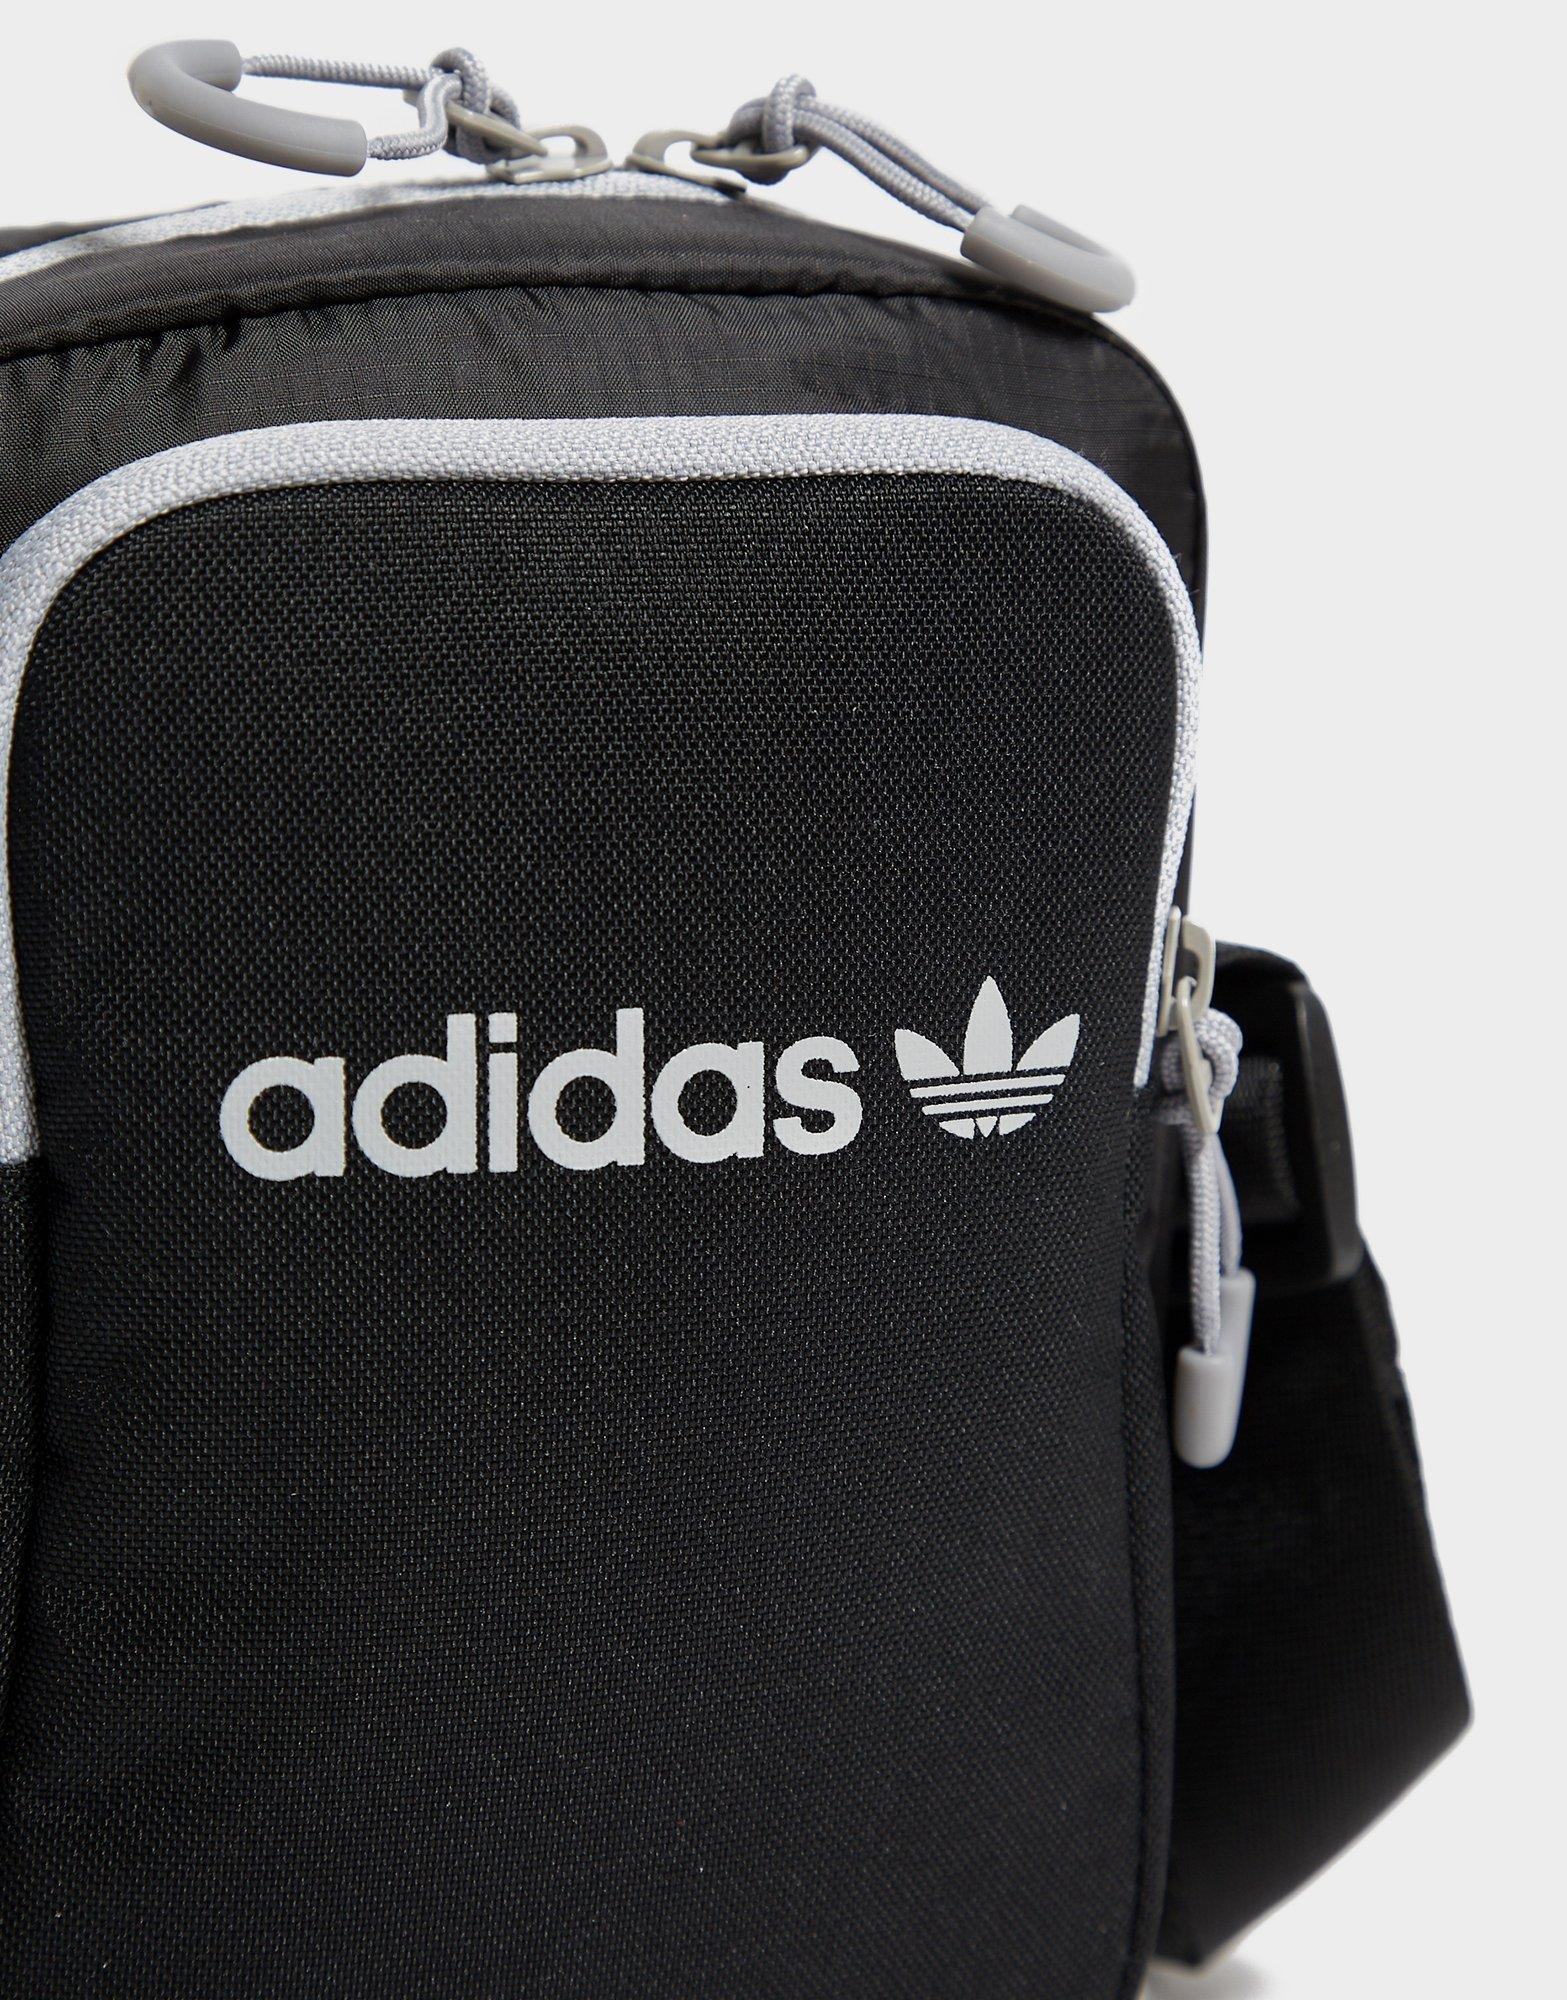 adidas zx backpack